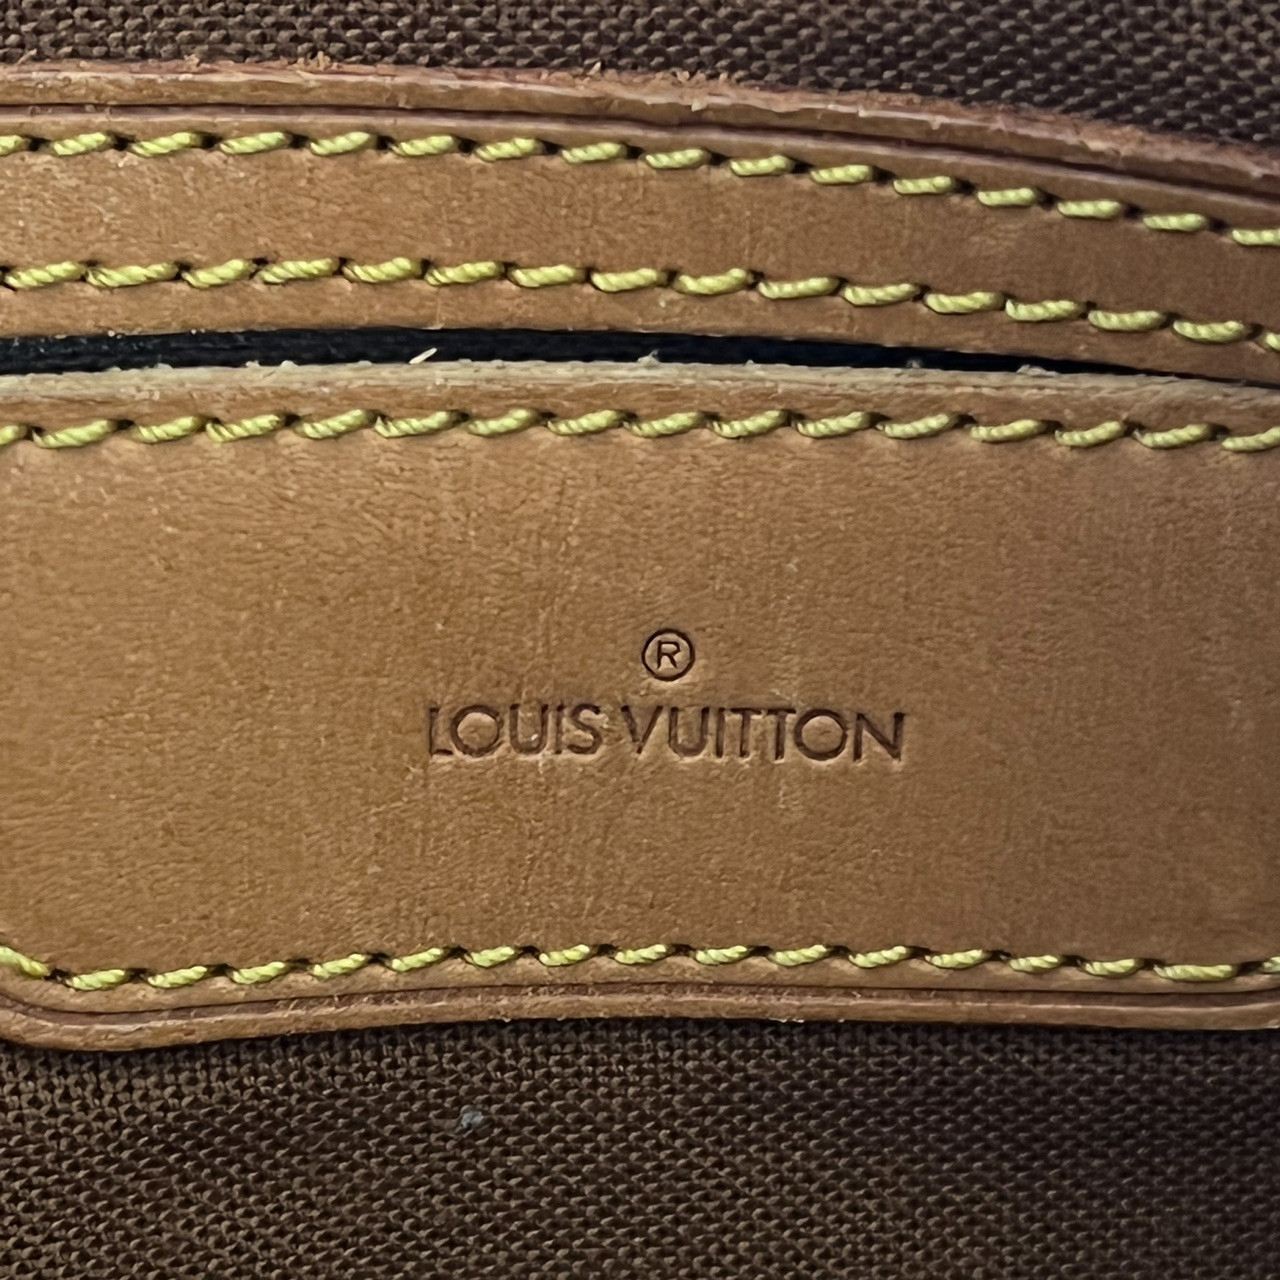 Sac à main Louis Vuitton Boulogne mini en tissu monogram taupe et